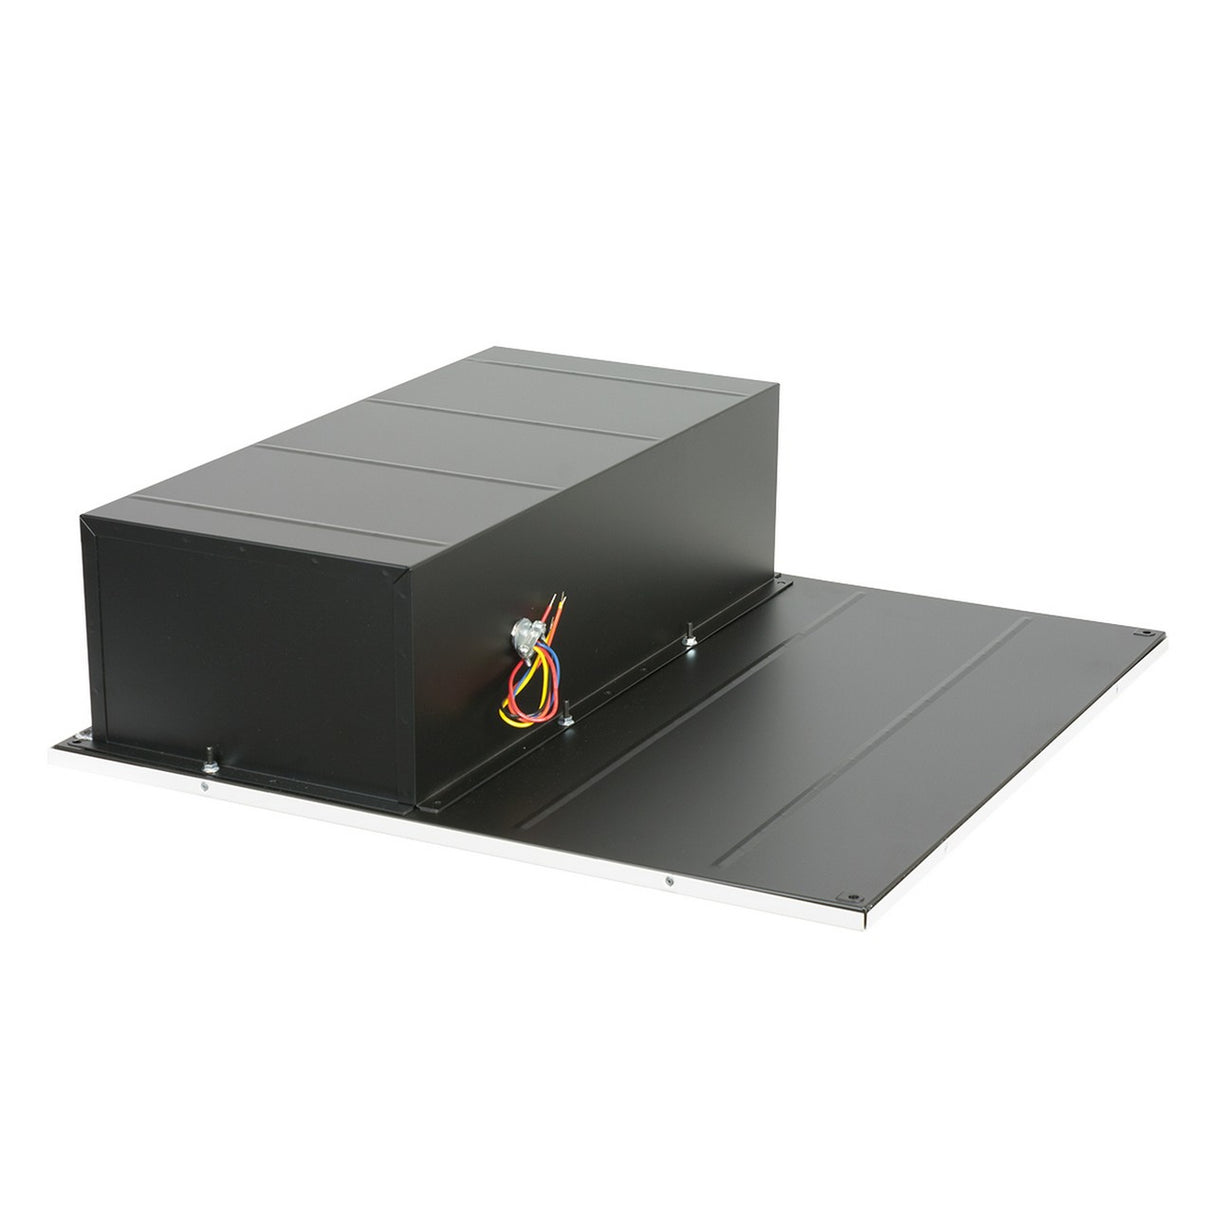 Lowell LT2-8A-TM32-Vb | 8 Inch Coaxial Speaker, 2 x 2 Tile System, 50W, 70V XFMR, 0.8 cu ft Backbox, Single Unit